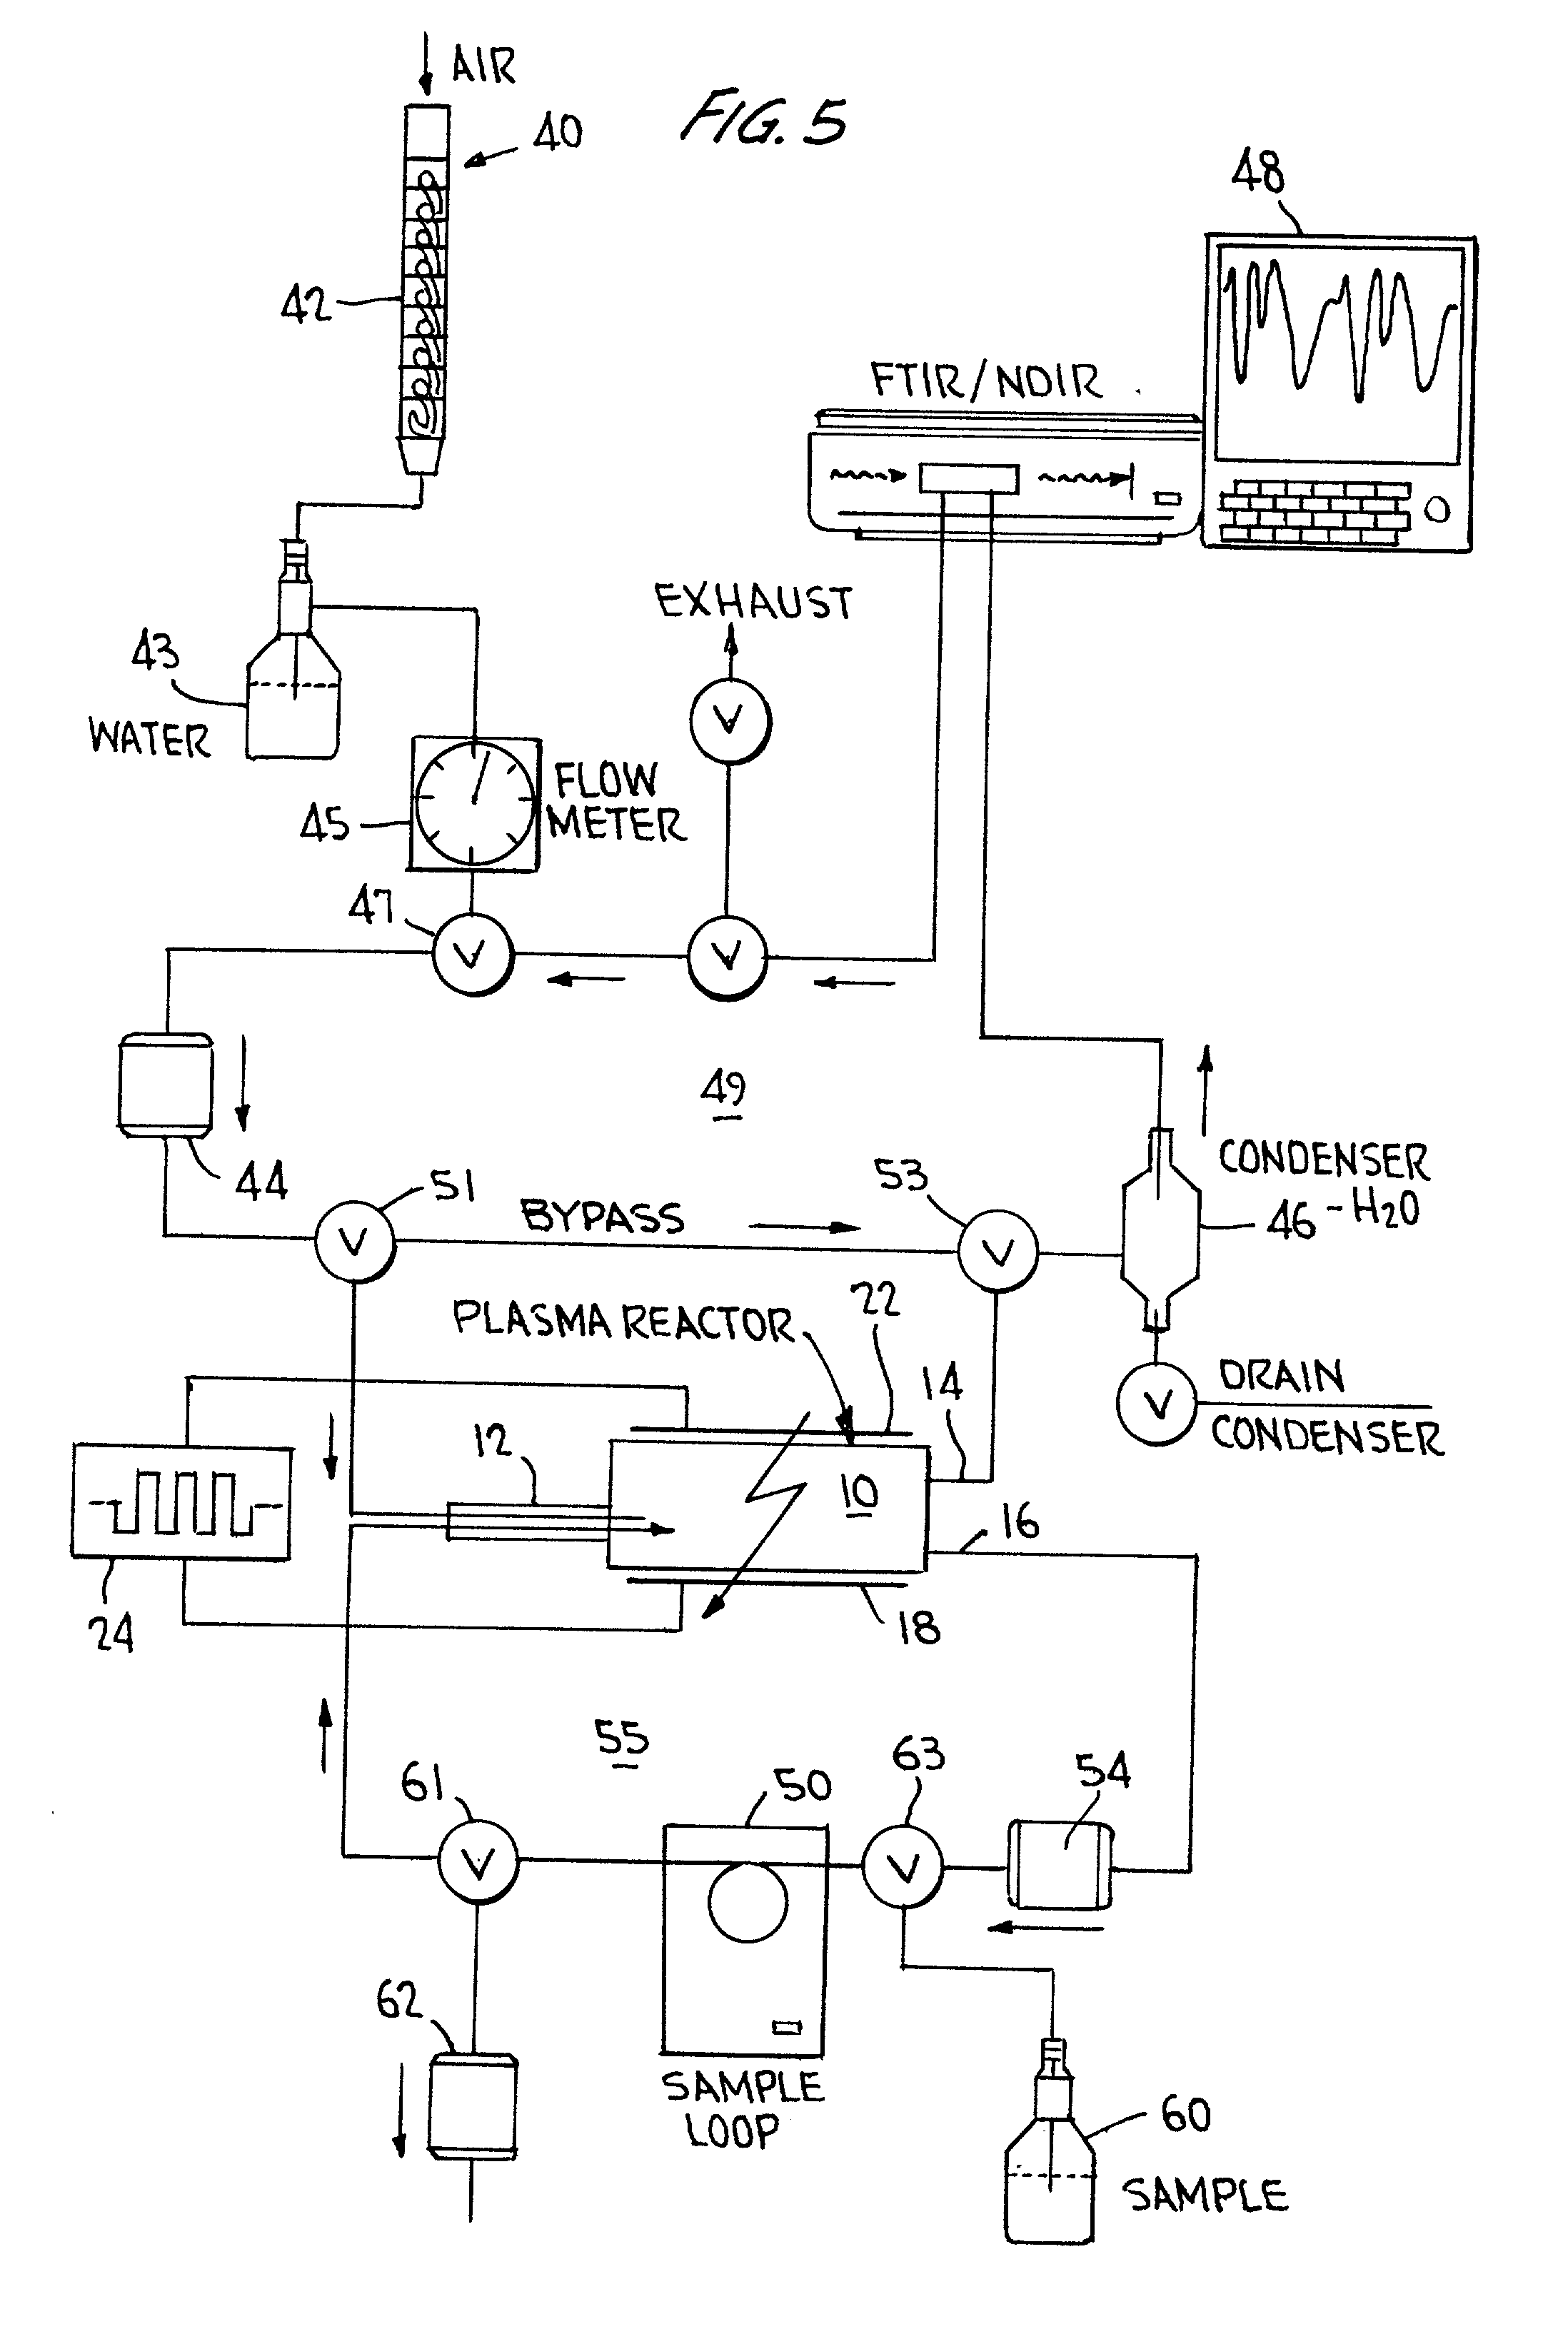 Wide-range TOC instrument using plasma oxidation